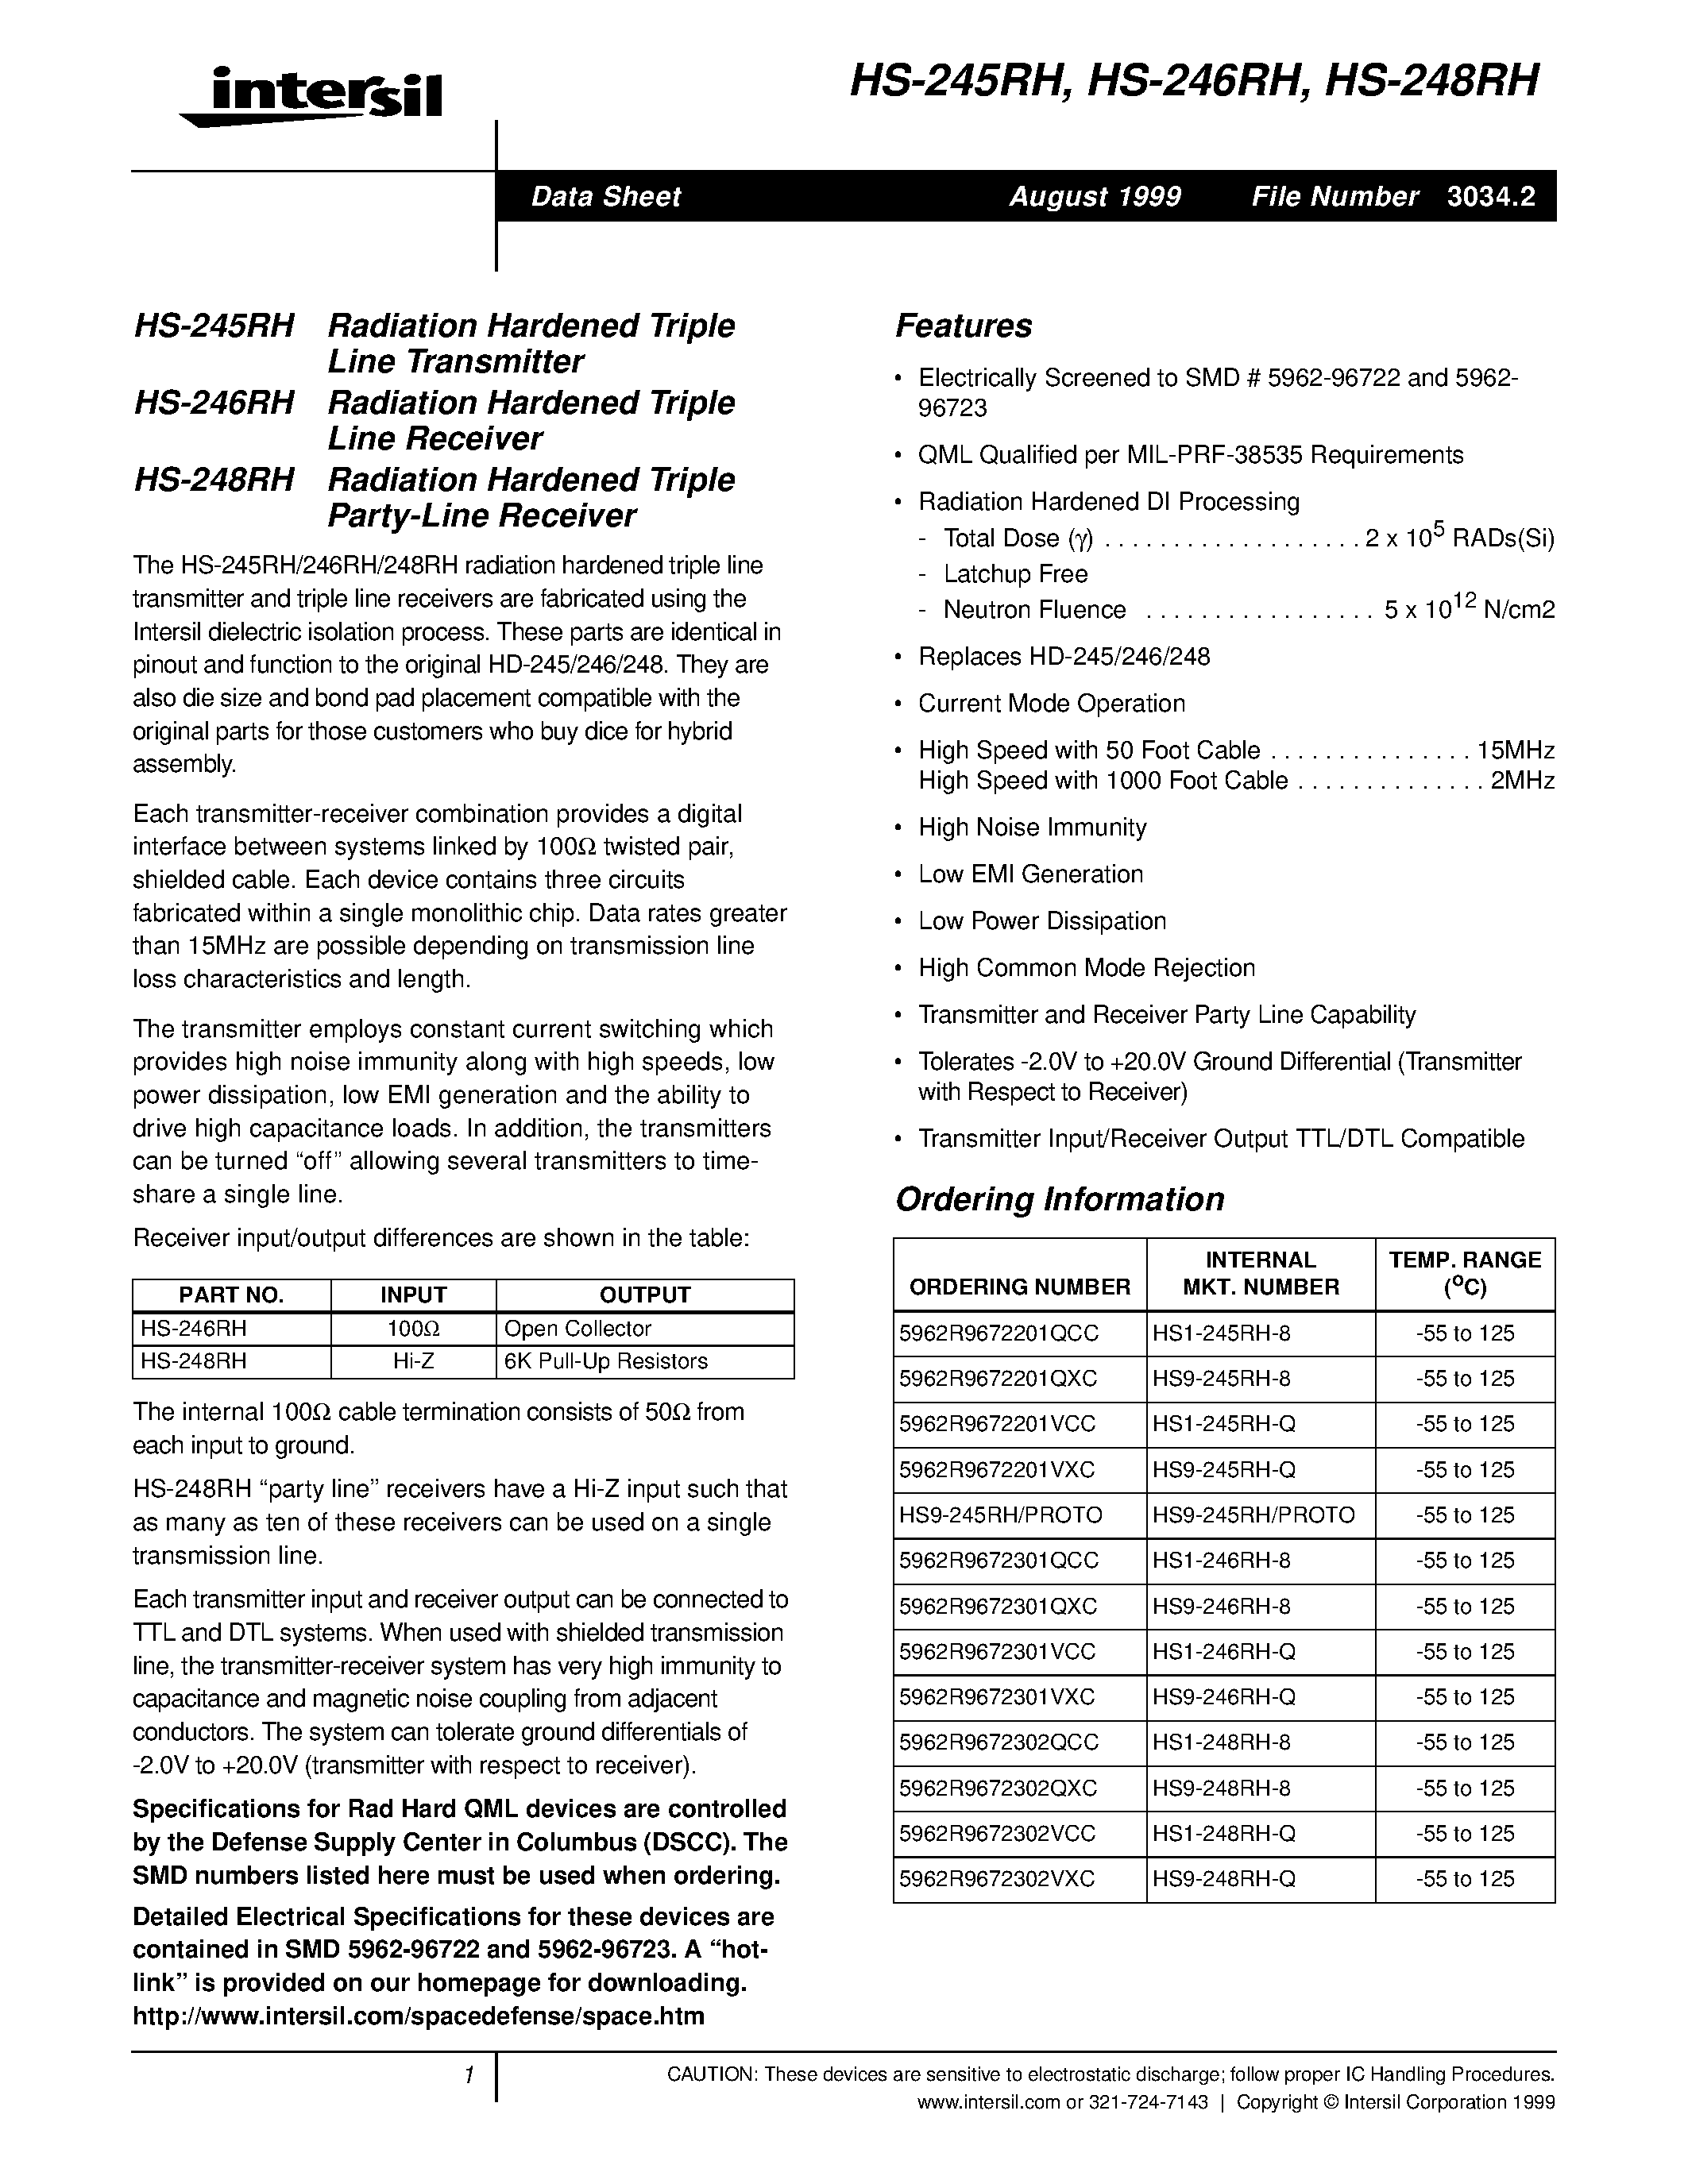 Даташит HS1-245RH-8 - Radiation Hardened Triple Line(party-Line) Transmitter страница 1